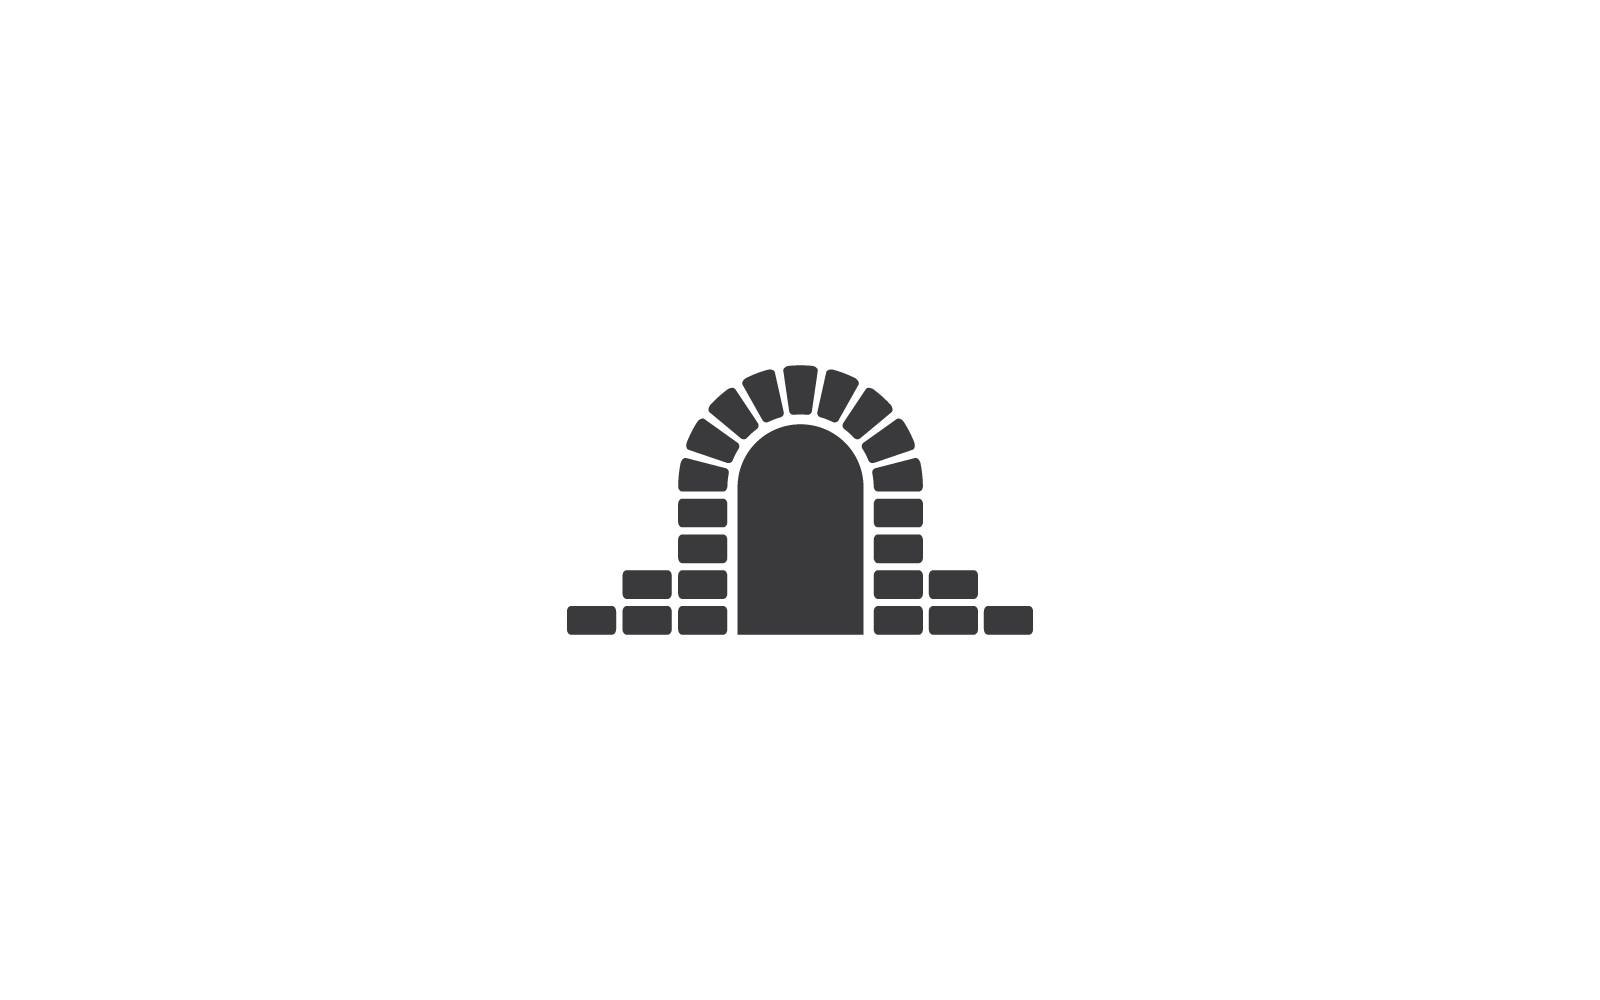 Wall bridge design logo illustration vector icon template